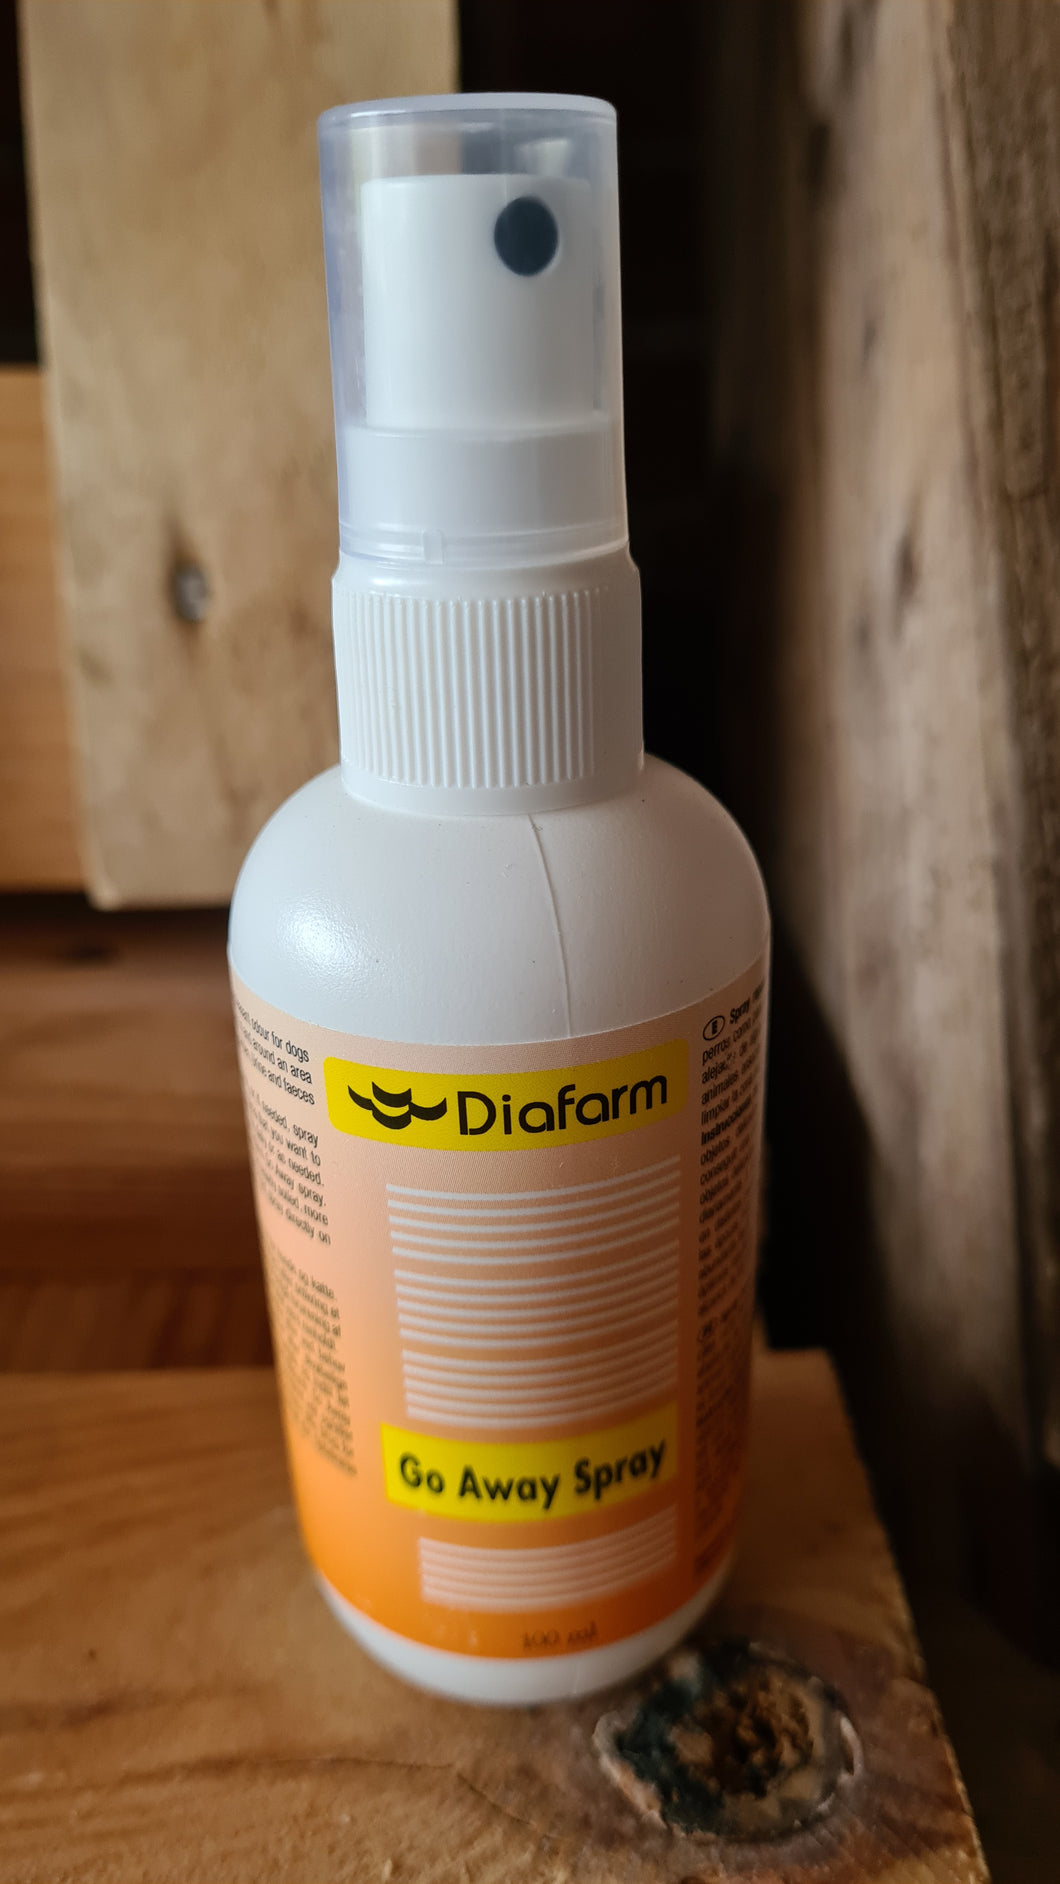 Diafarm Go Away Spray